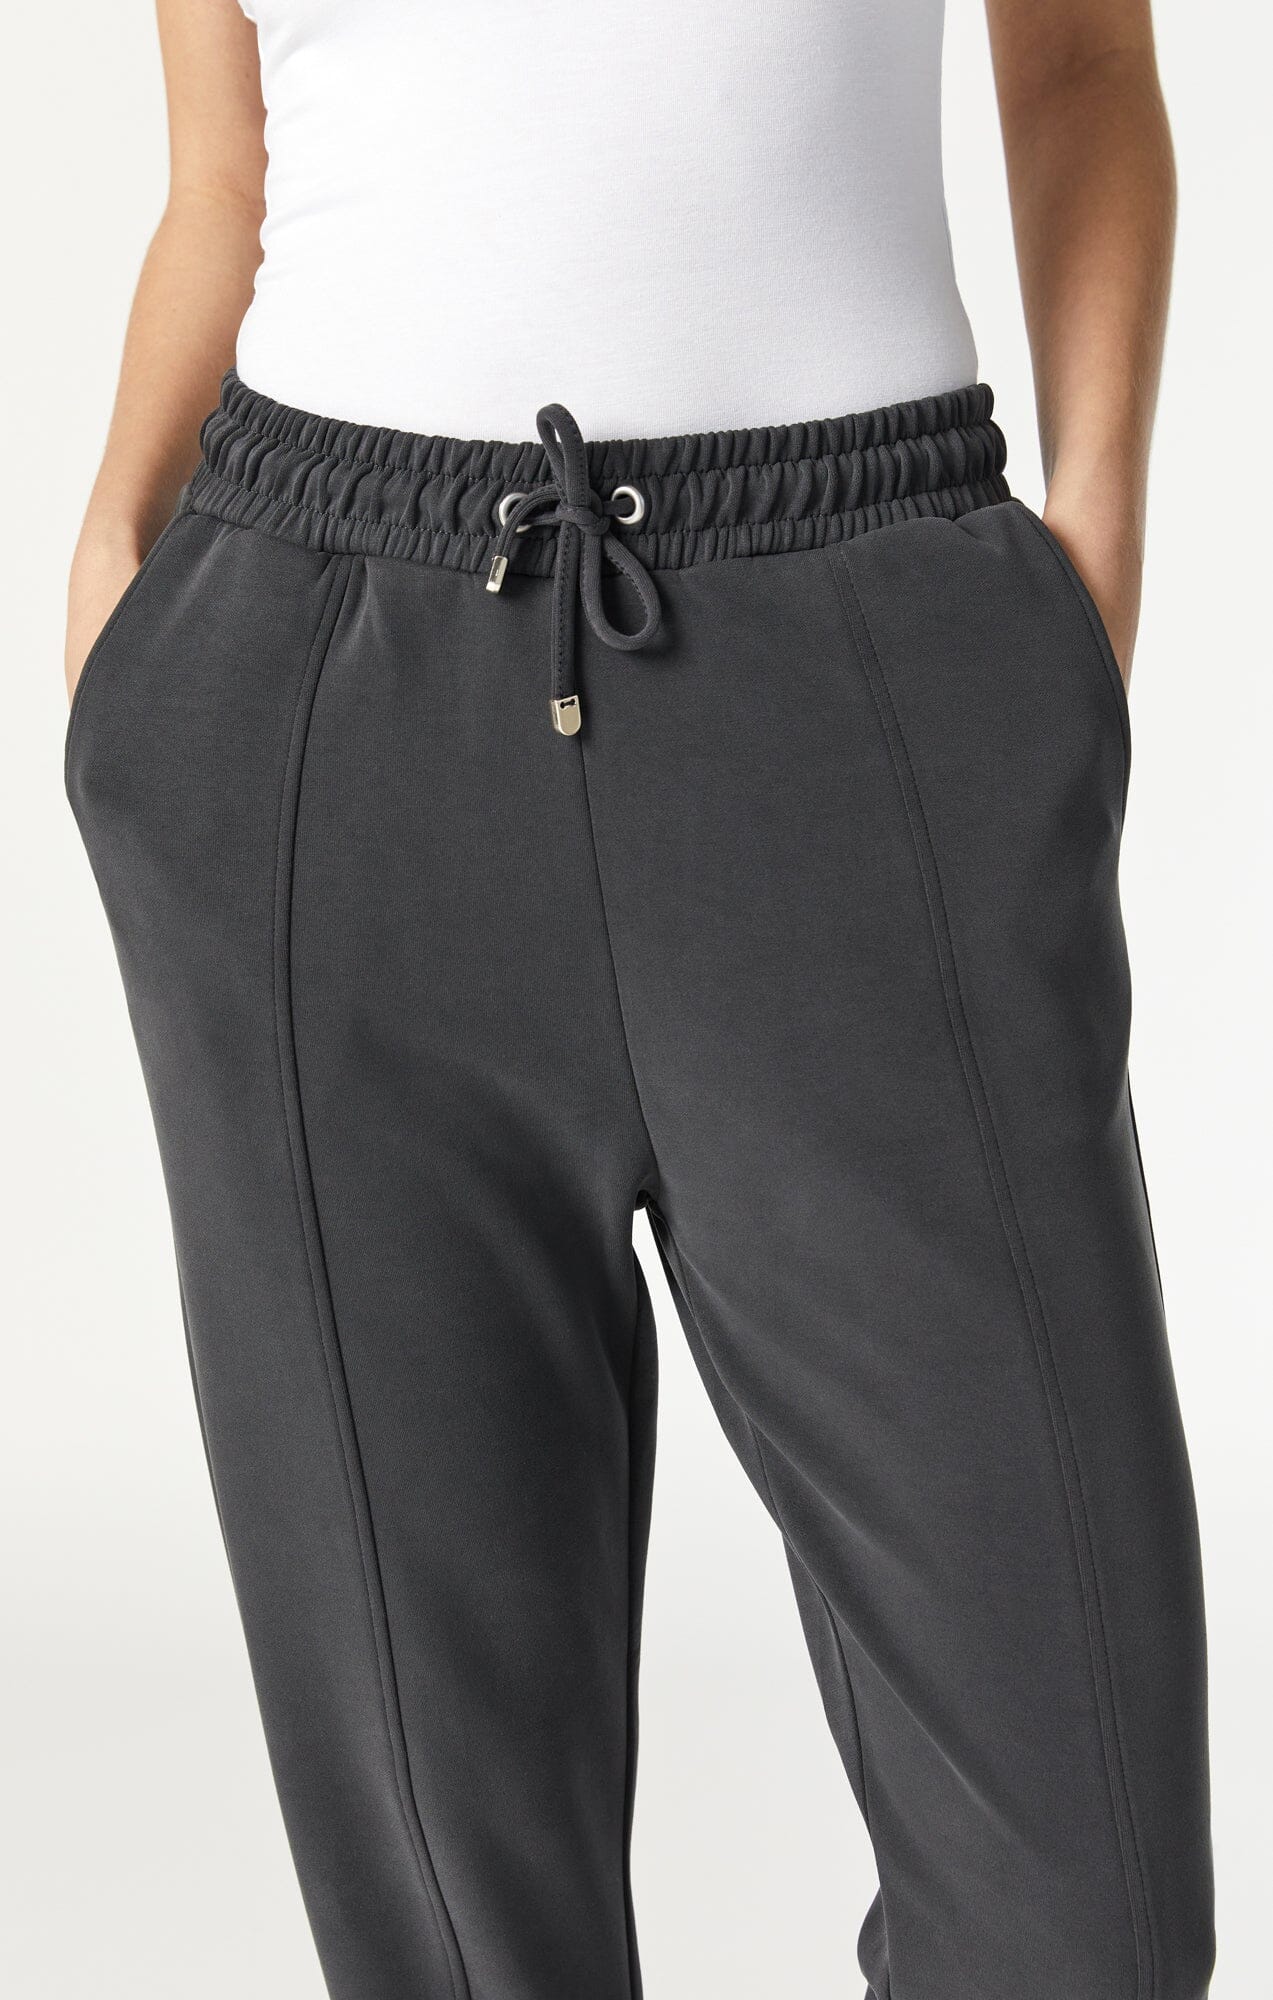 Petite Sweatpants for Women Women's Belt Less High Waisted Wide